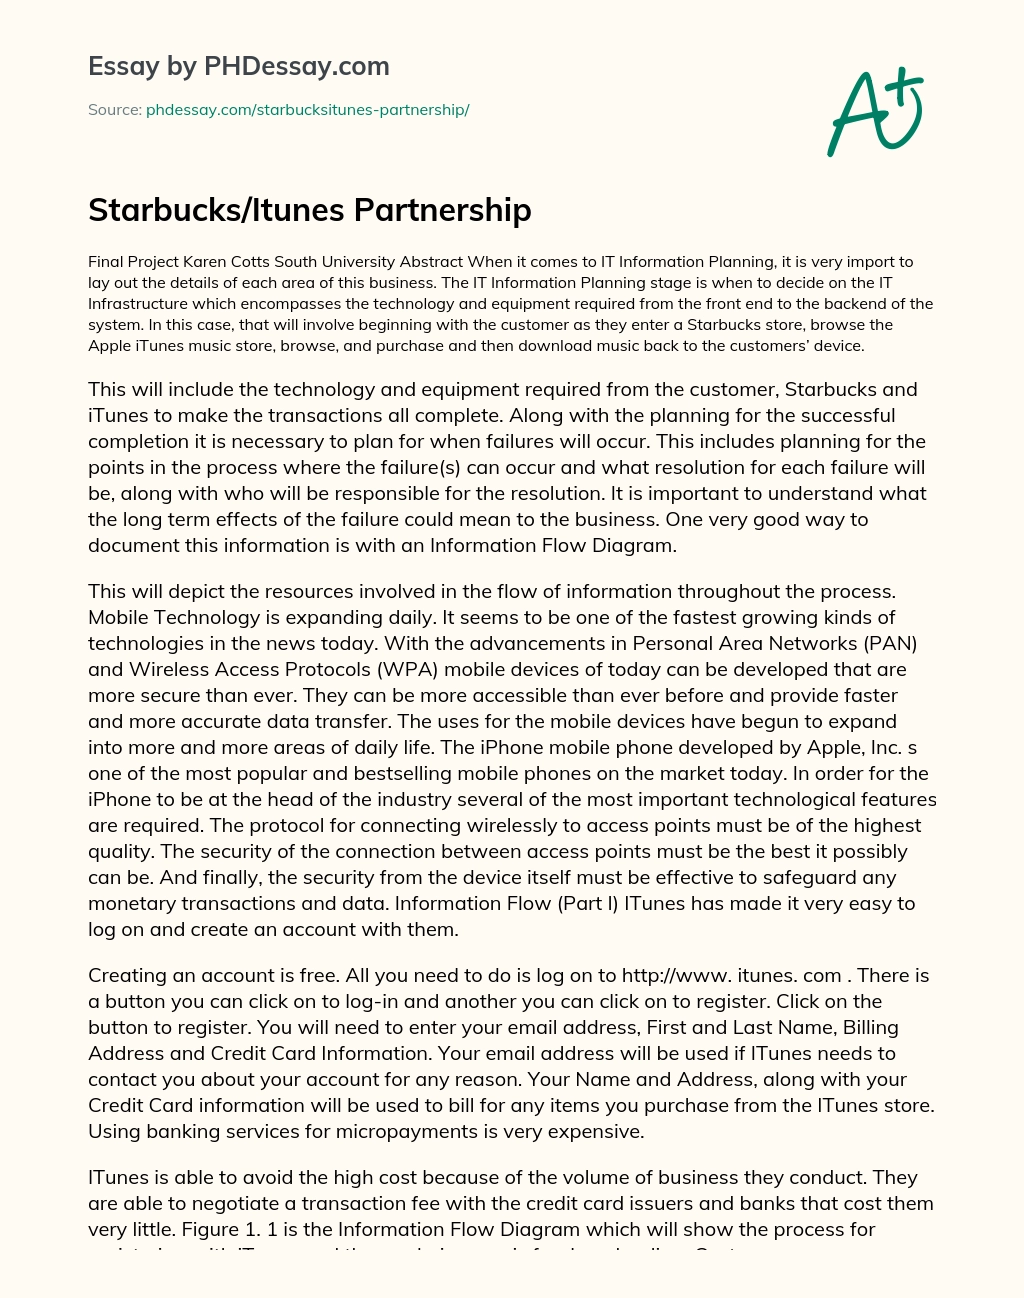 Starbucks and iTunes Partnership essay